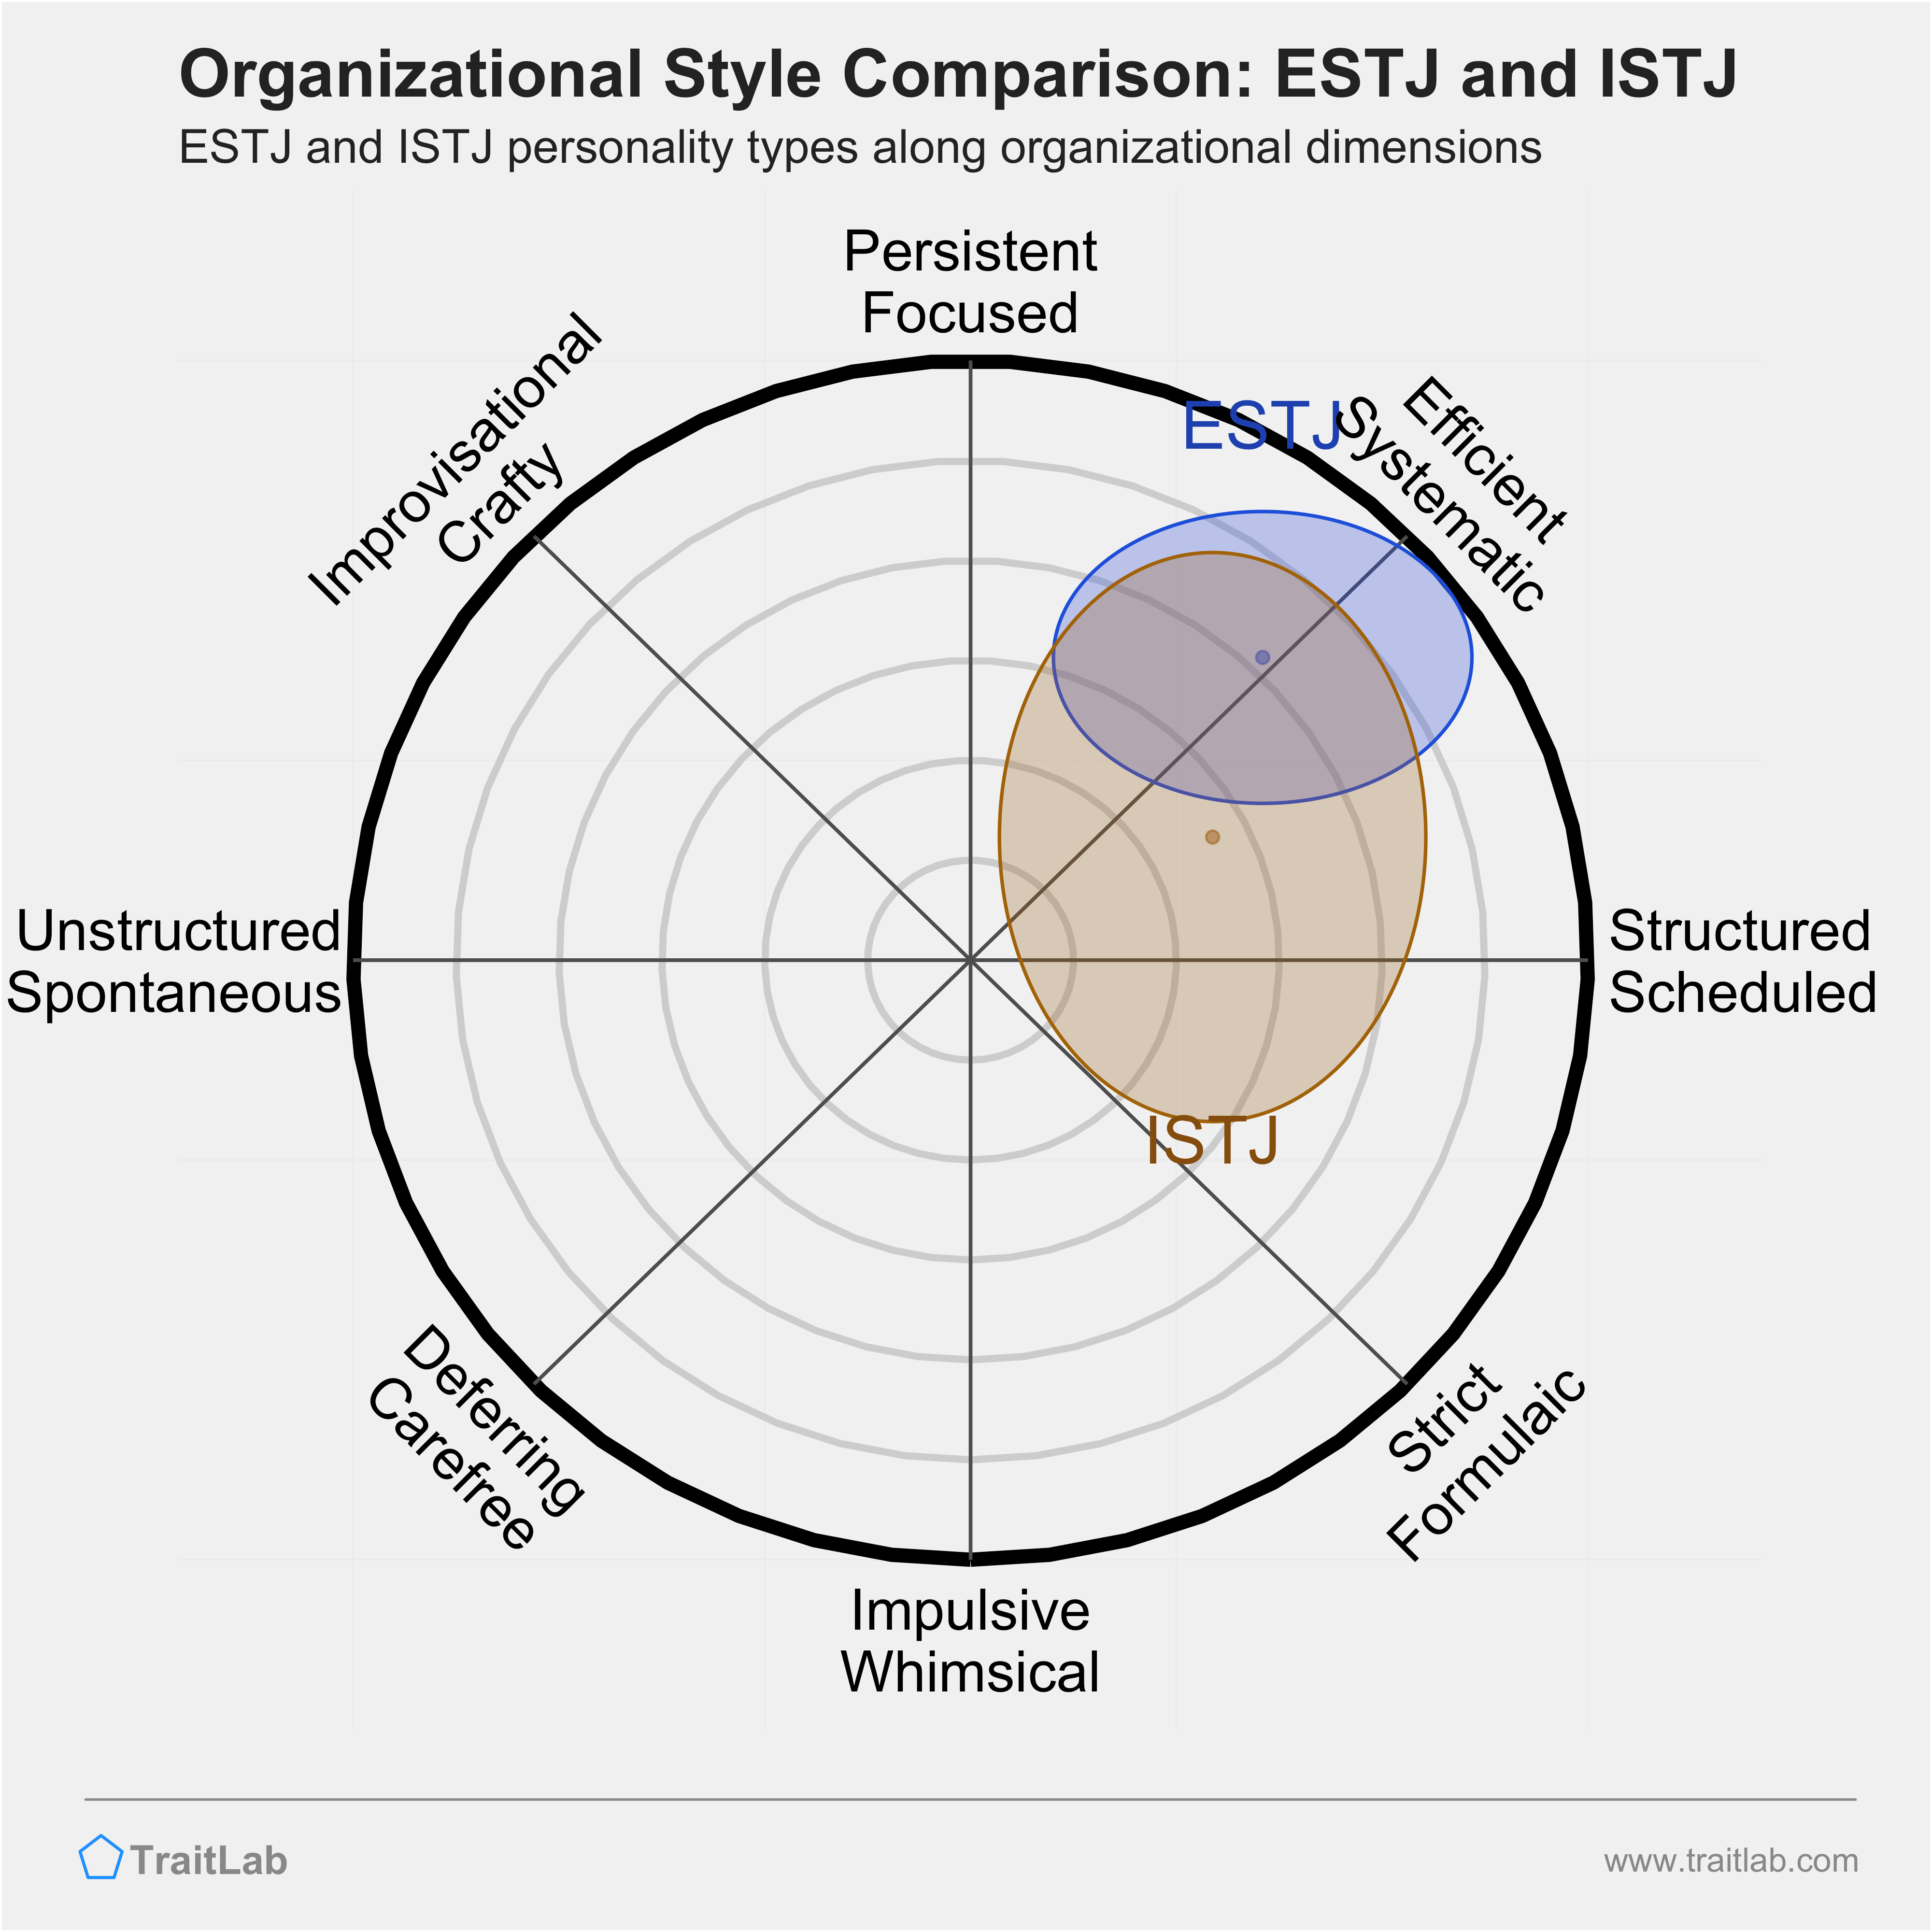 ESTJ and ISTJ comparison across organizational dimensions